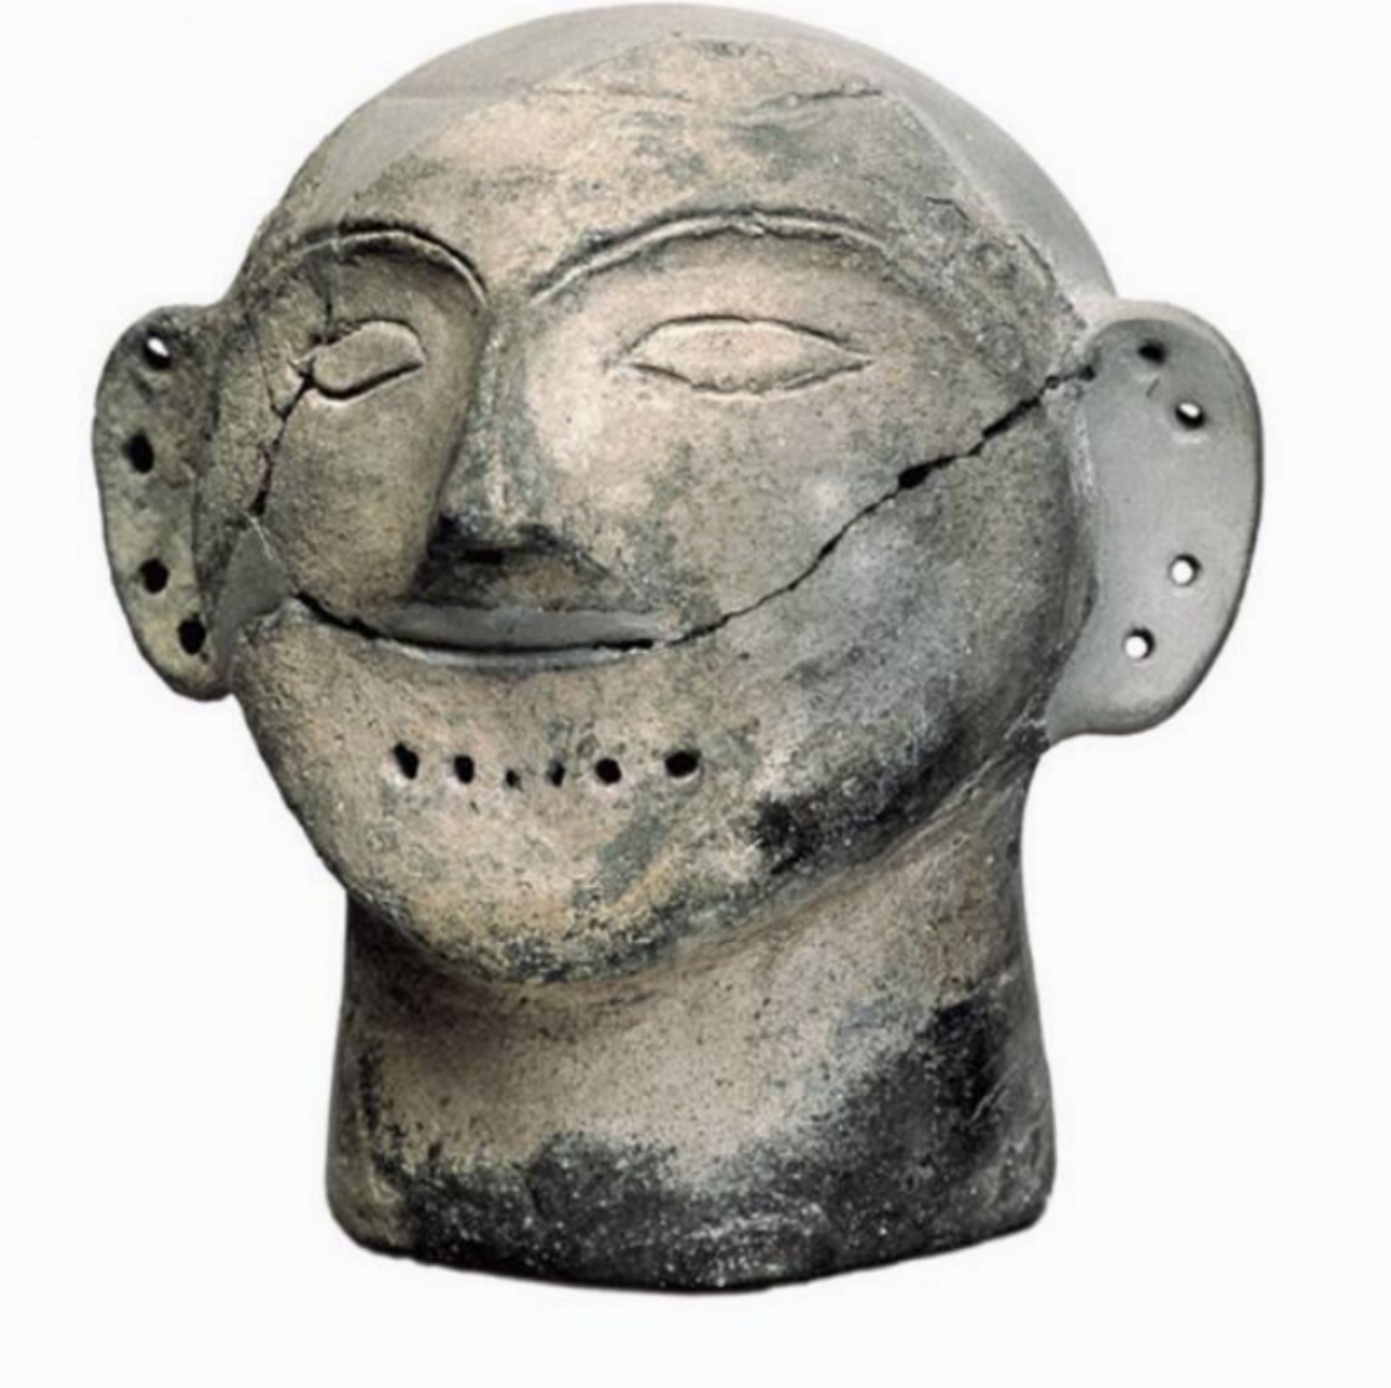 Clay anthropomorphic head, Late Chalcolithic period, 4500-4000 BCE, Hamangia Culture, e fumanoeng e qoelisoa Varna Lake, Varna Archaeology Museum.